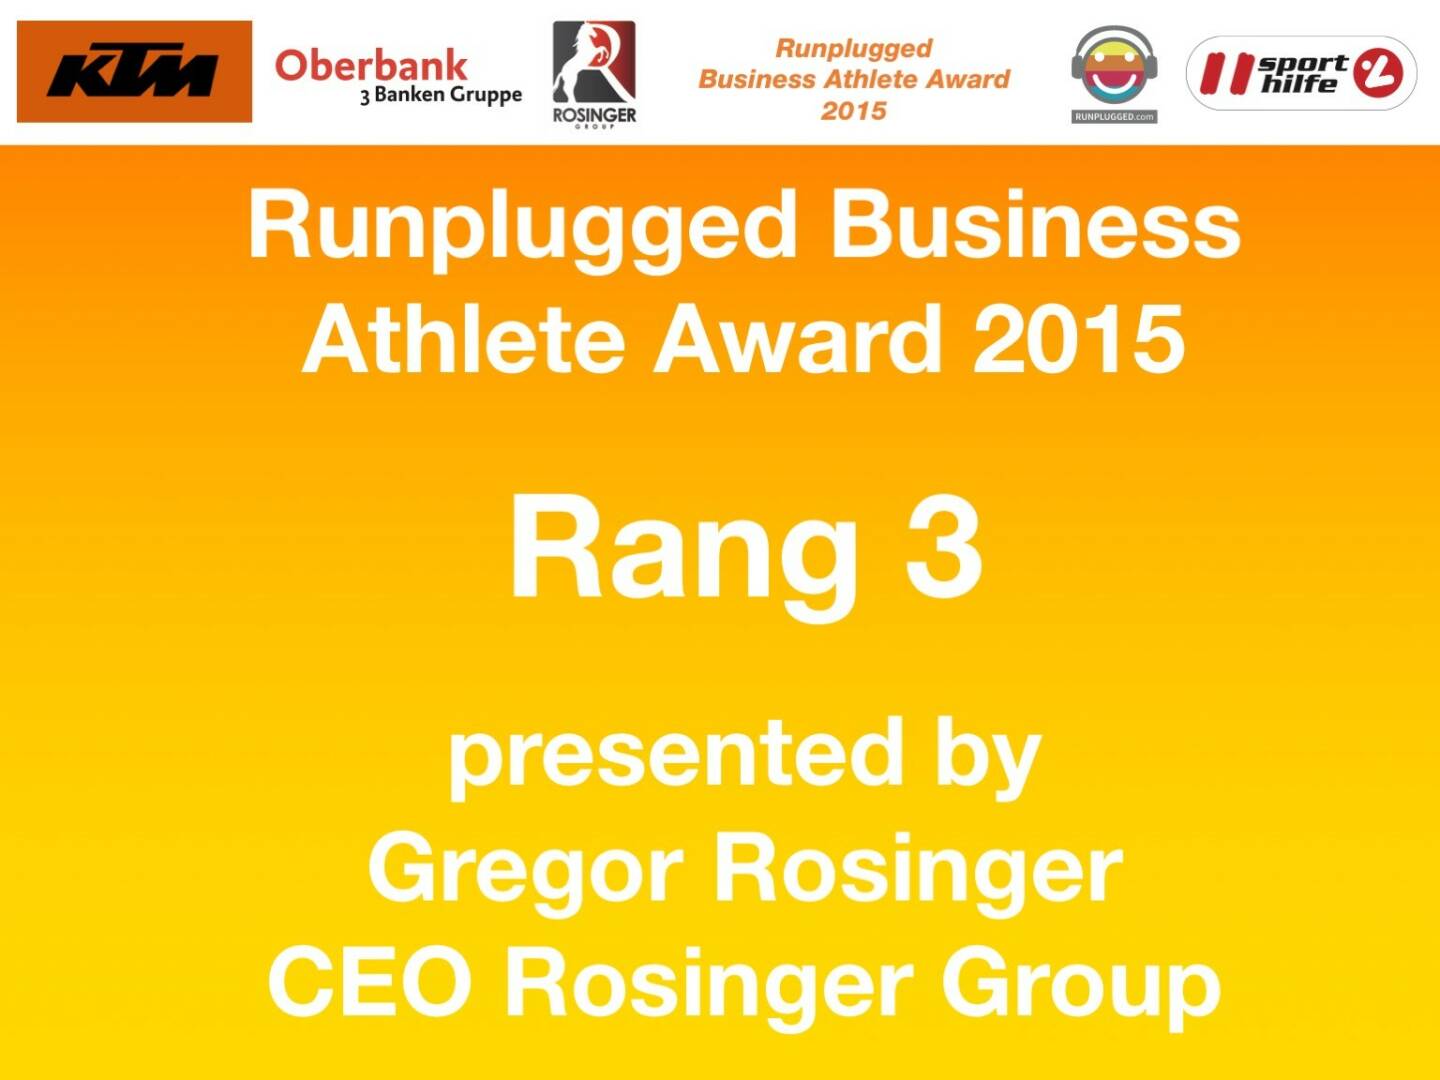 Runplugged Business Athlete Award 2015 Rang 3 presented by Gregor Rosinger, CEO Rosinger Group